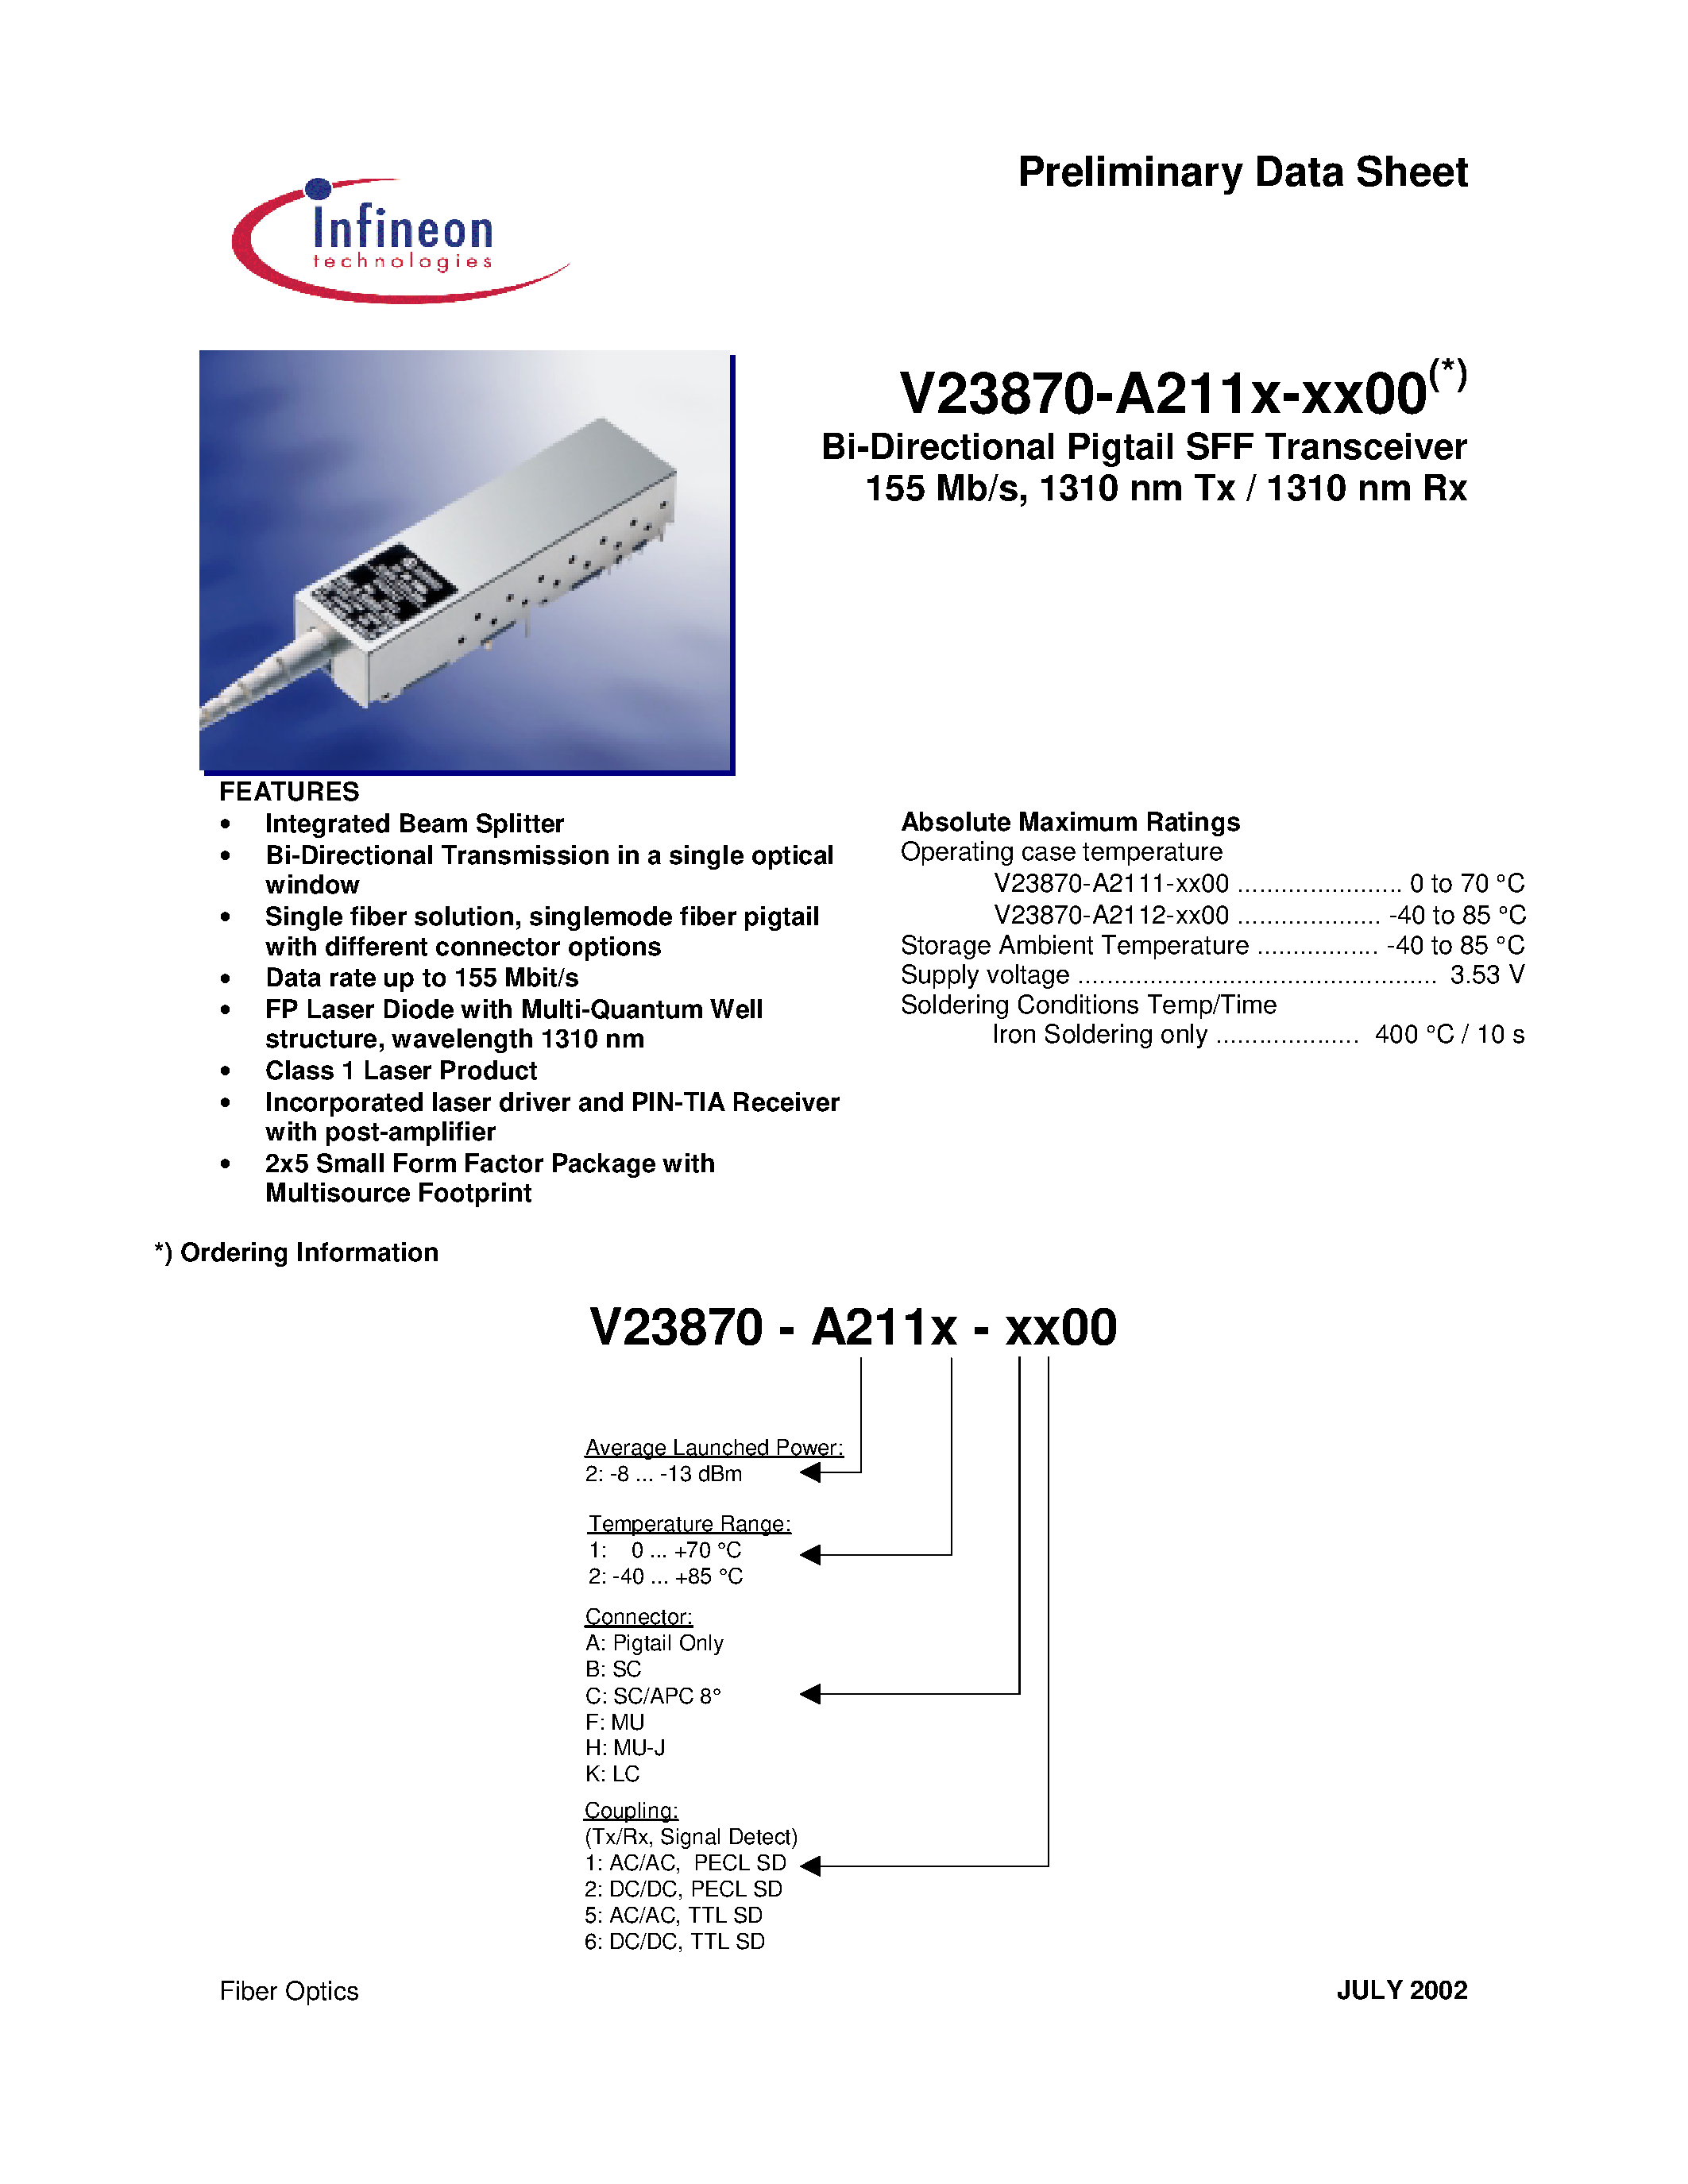 Даташит V23870-A2111-C500 - Bi-Directional Pigtail SFF Transceiver 155 Mb/s/ 1310 nm Tx / 1310 nm Rx страница 1